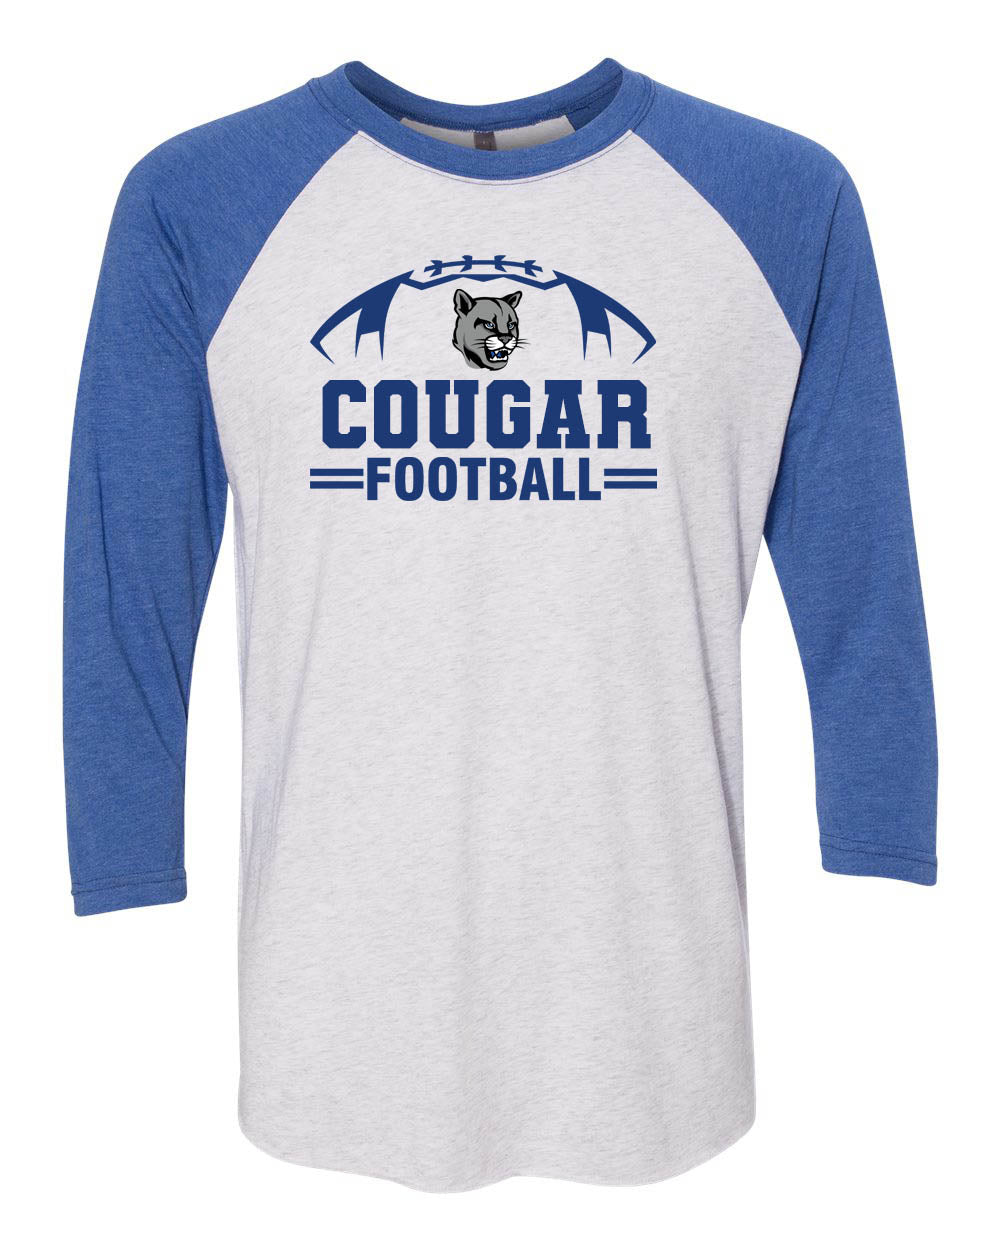 Cougar Football raglan shirt